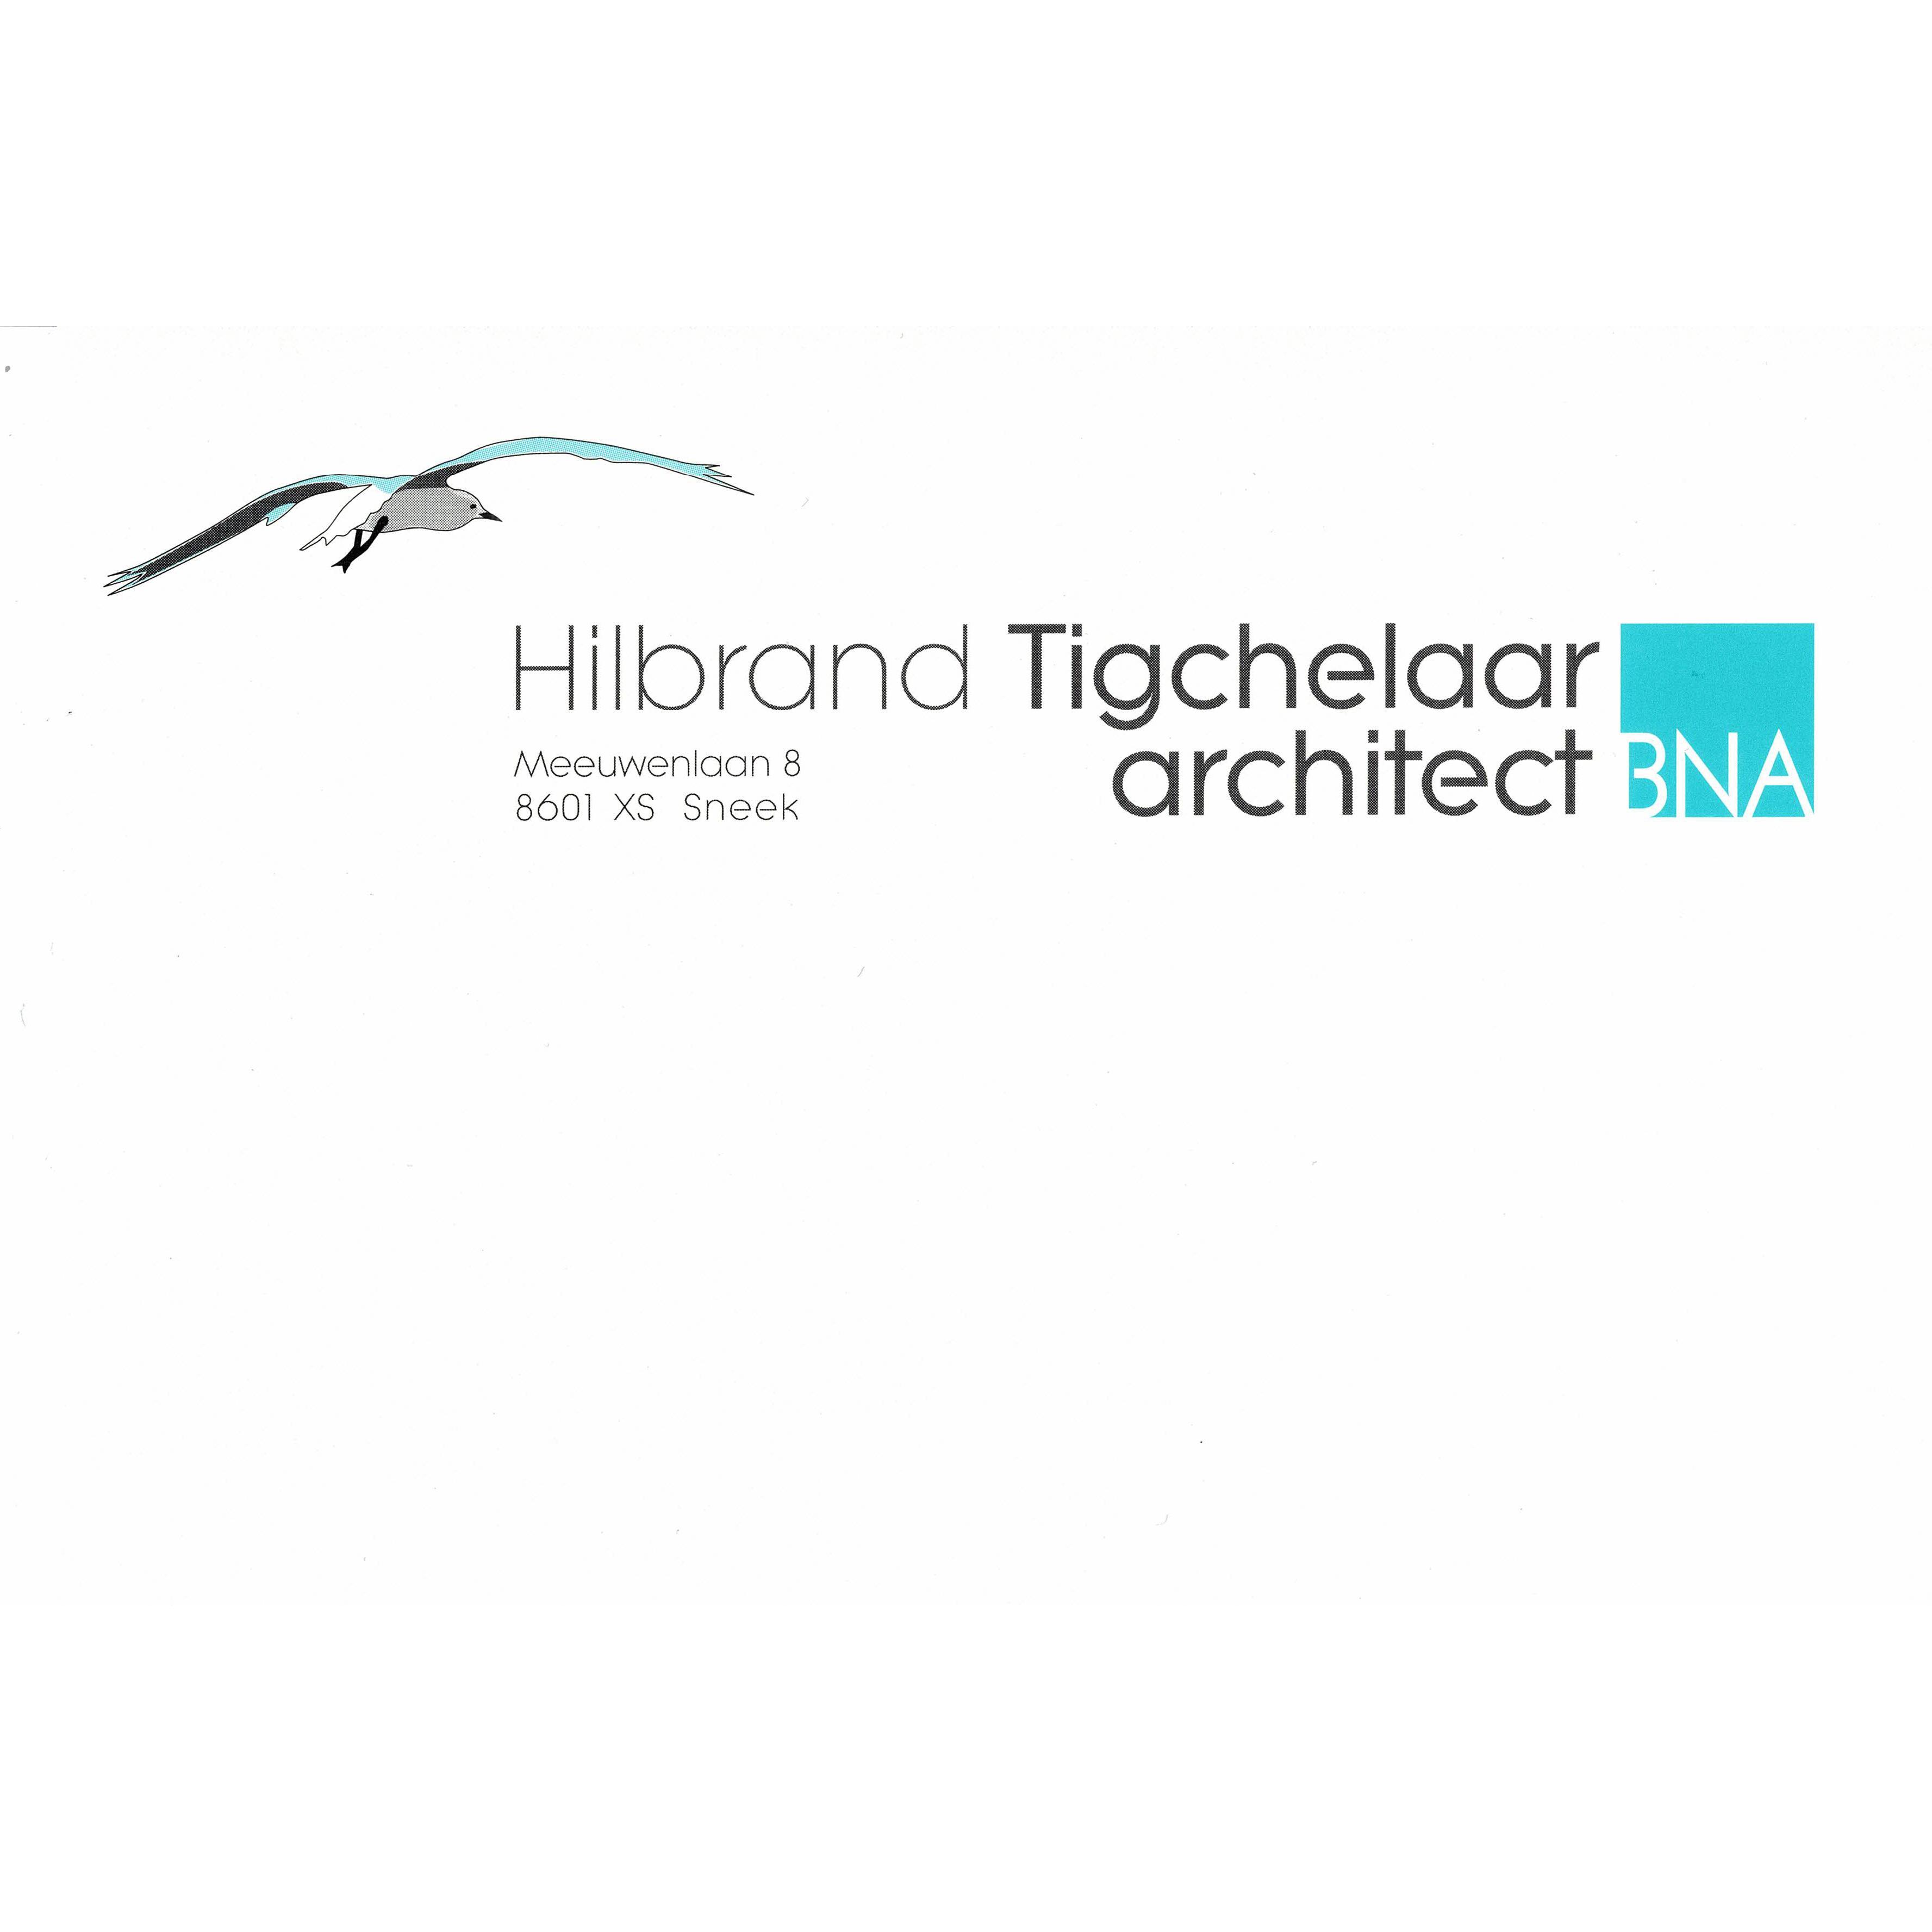 Hilbrand Tigchelaar architect bna Logo